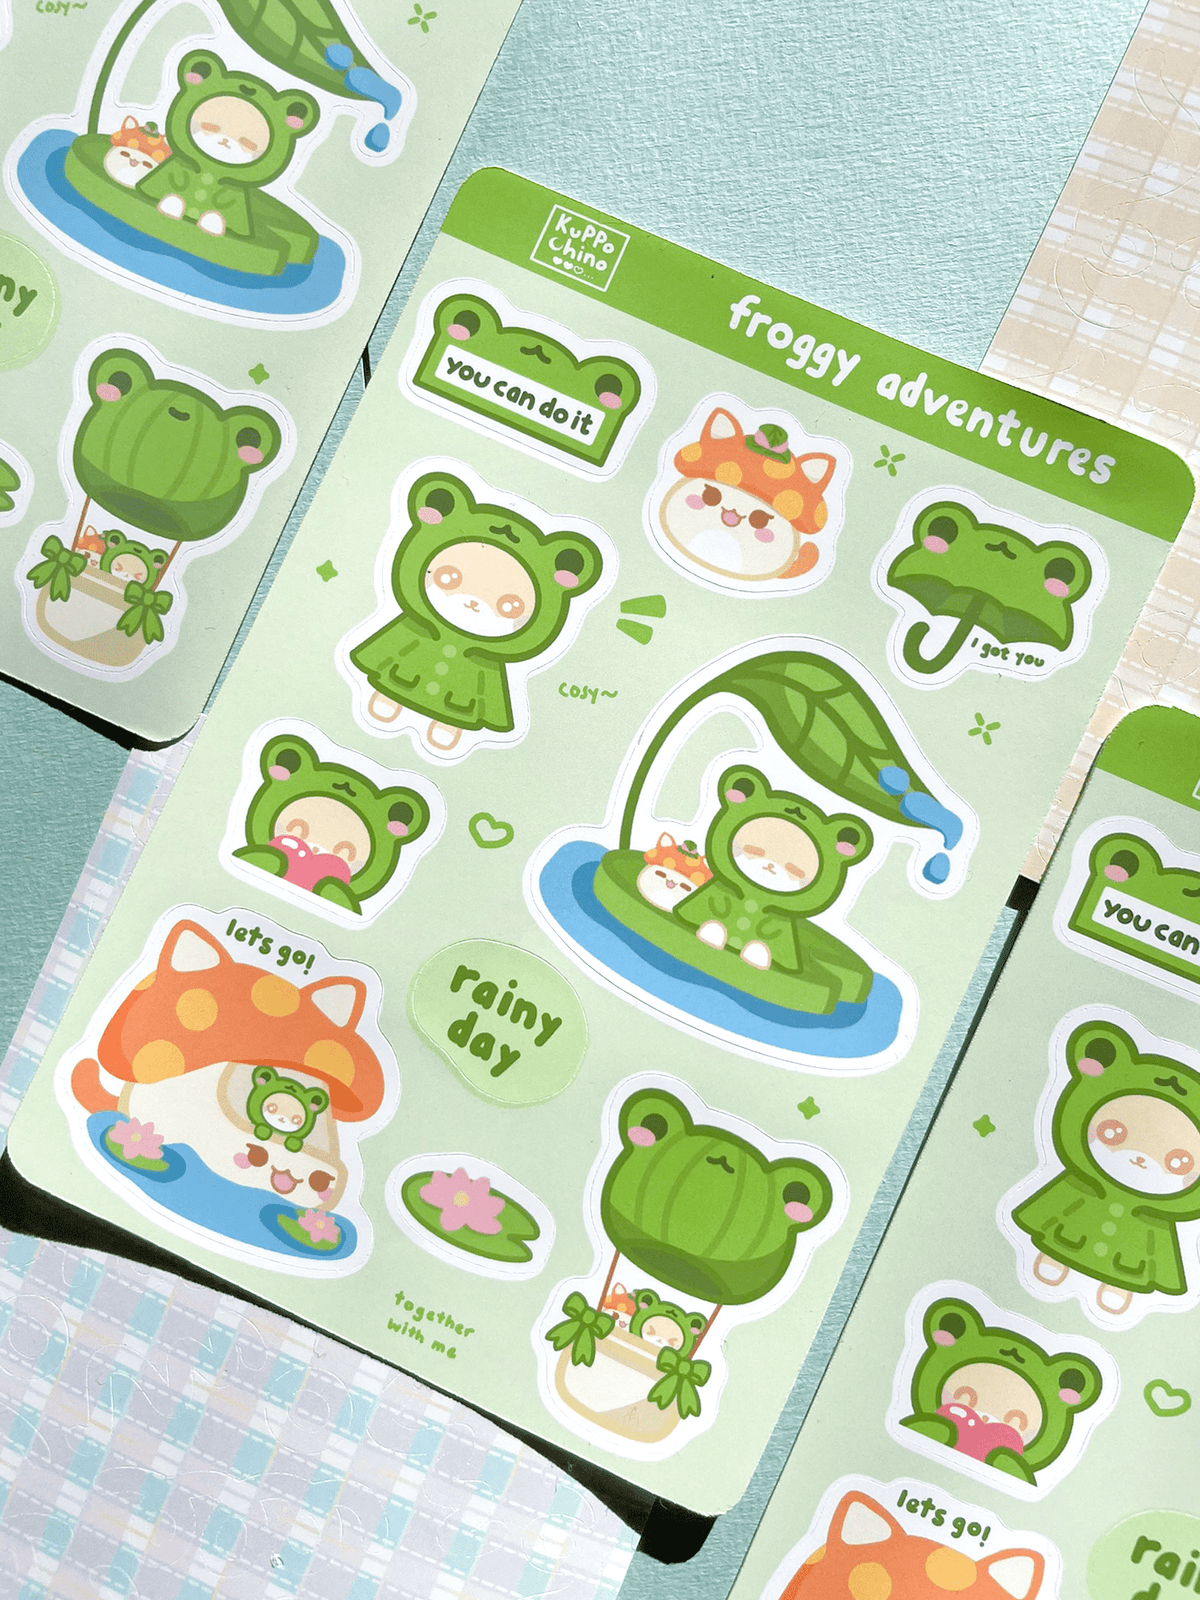 Kuppochino Cafe 01 Froggy Adventures Sticker Sheet